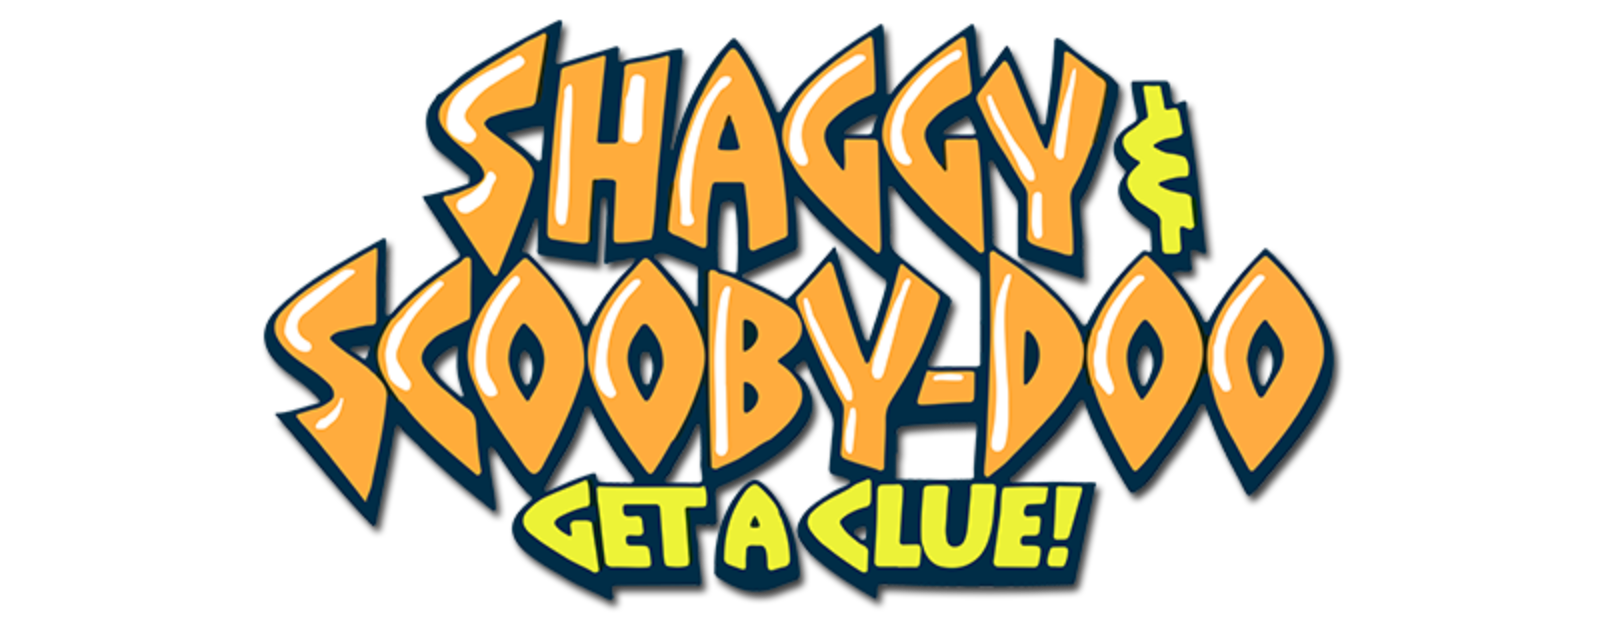 Shaggy Scooby Doo Get a Clue